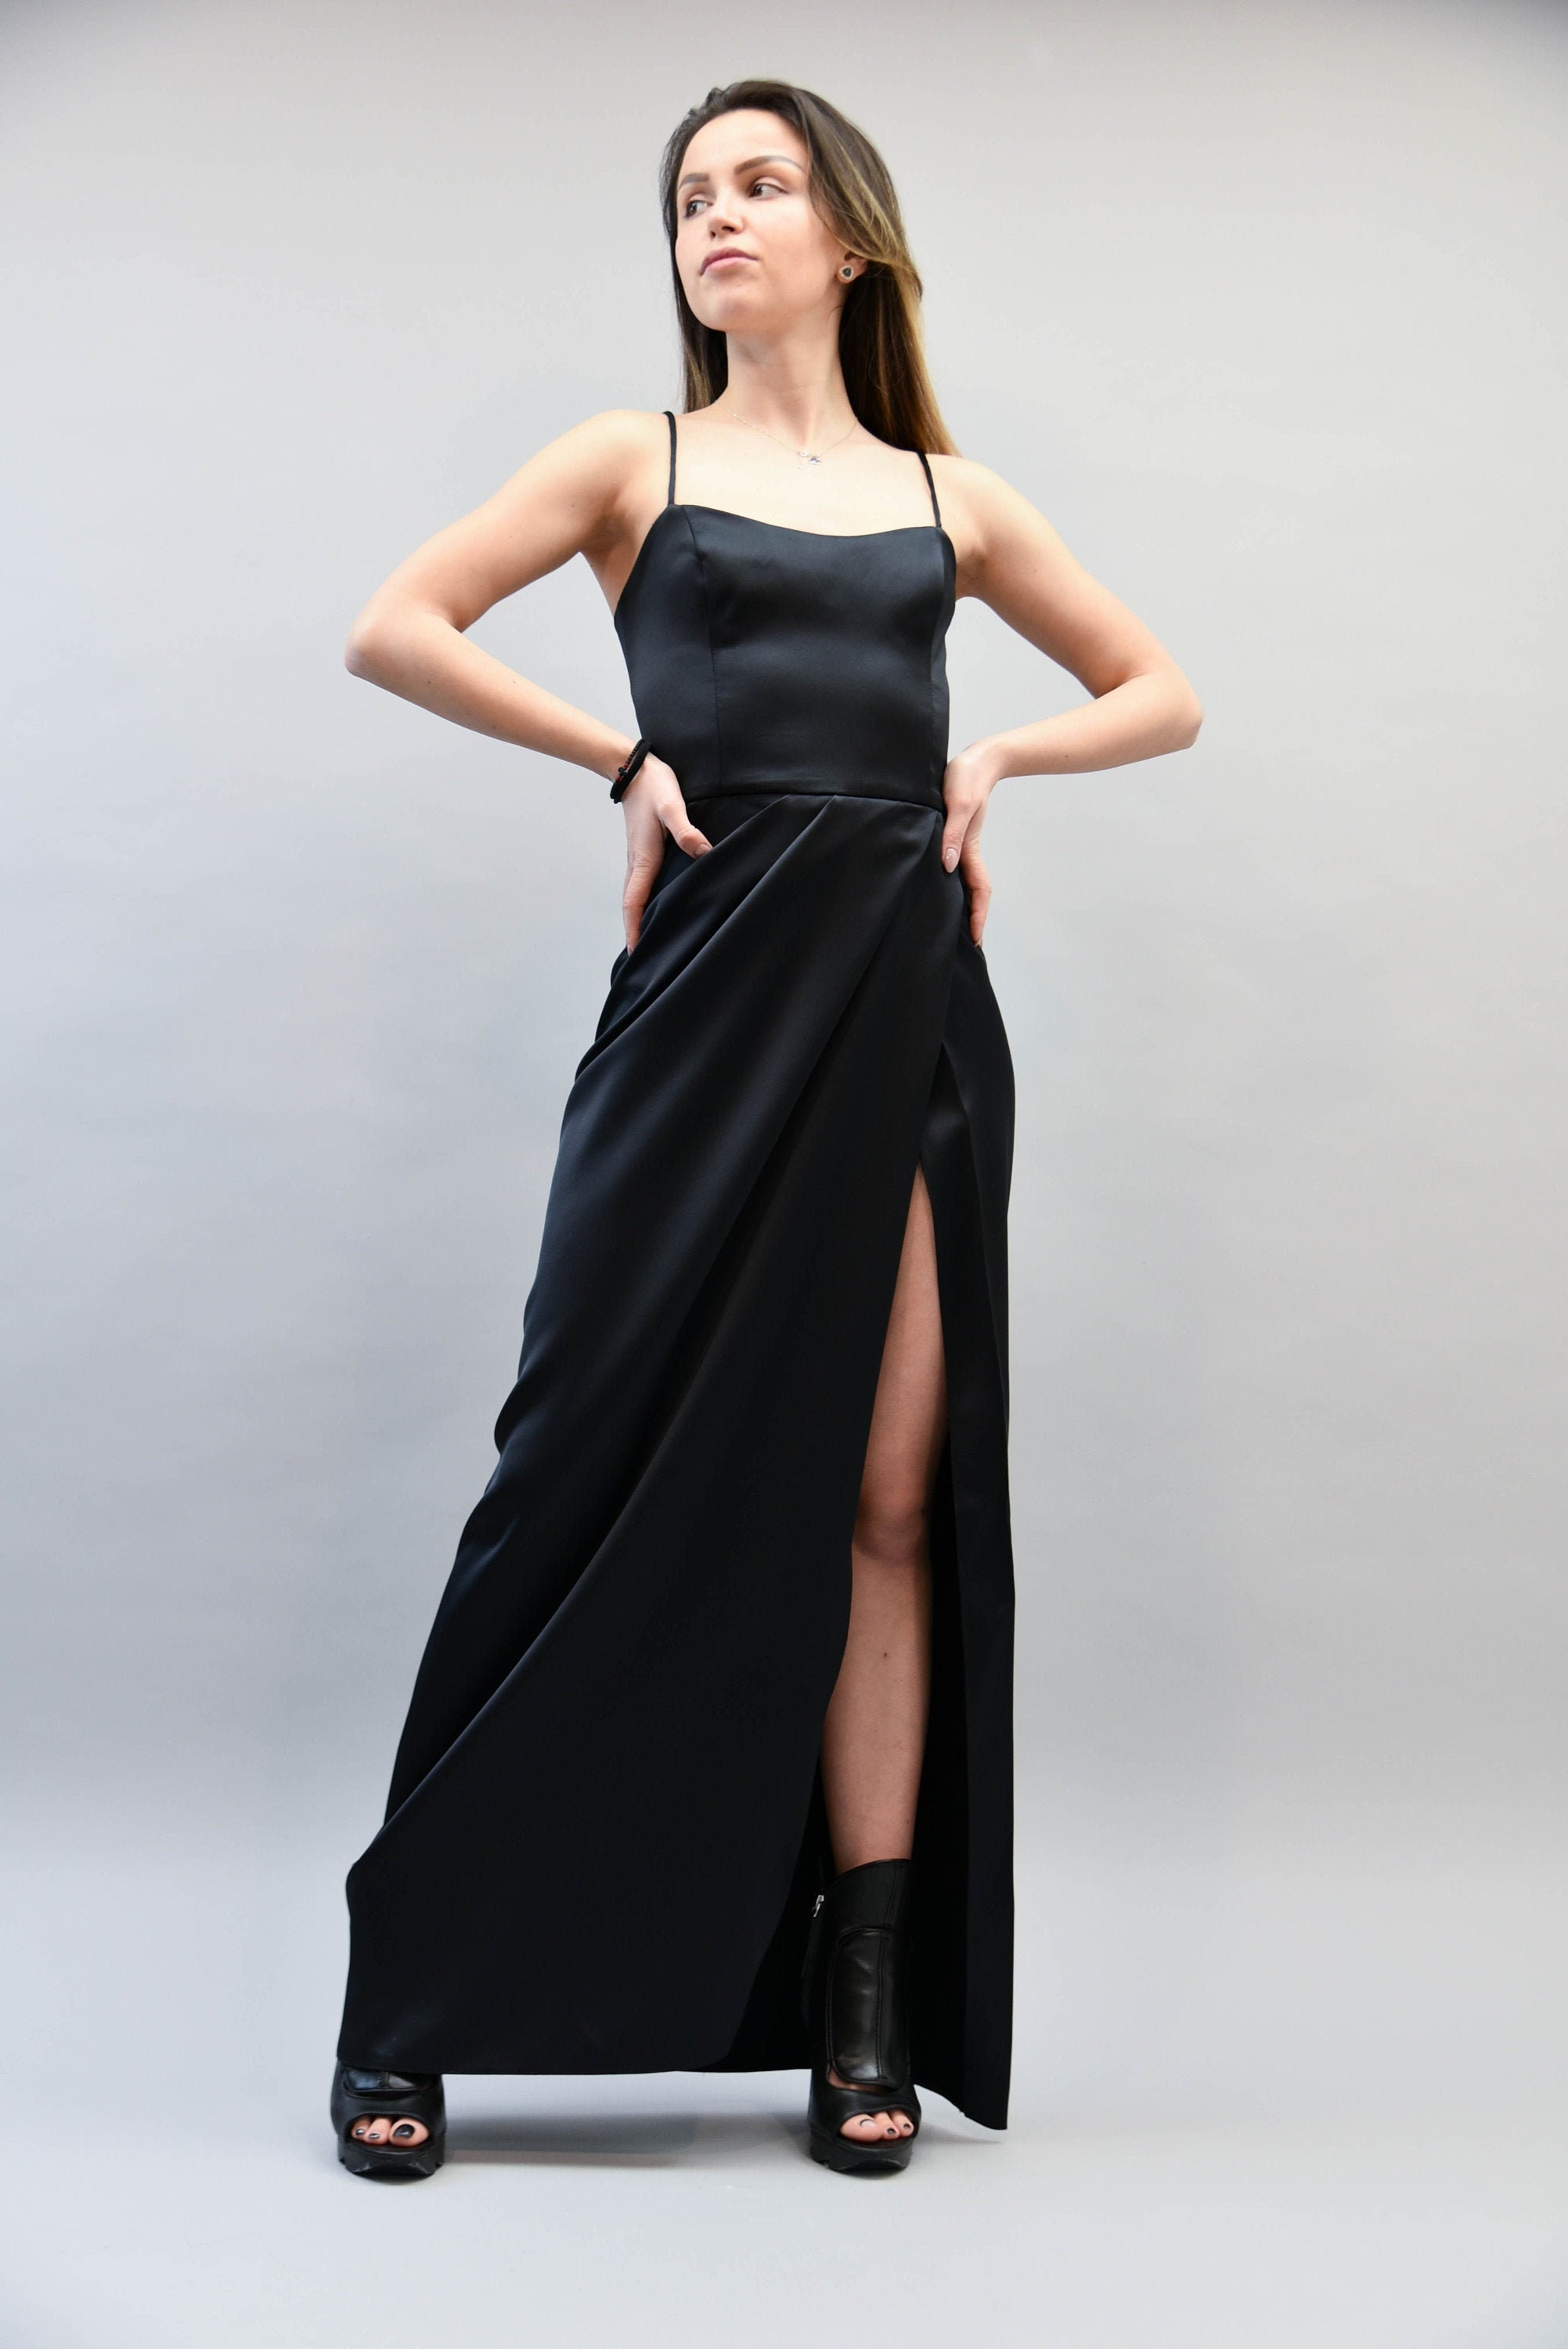 High Neck Front Black Long Prom Dresses 2021 - Bridelily